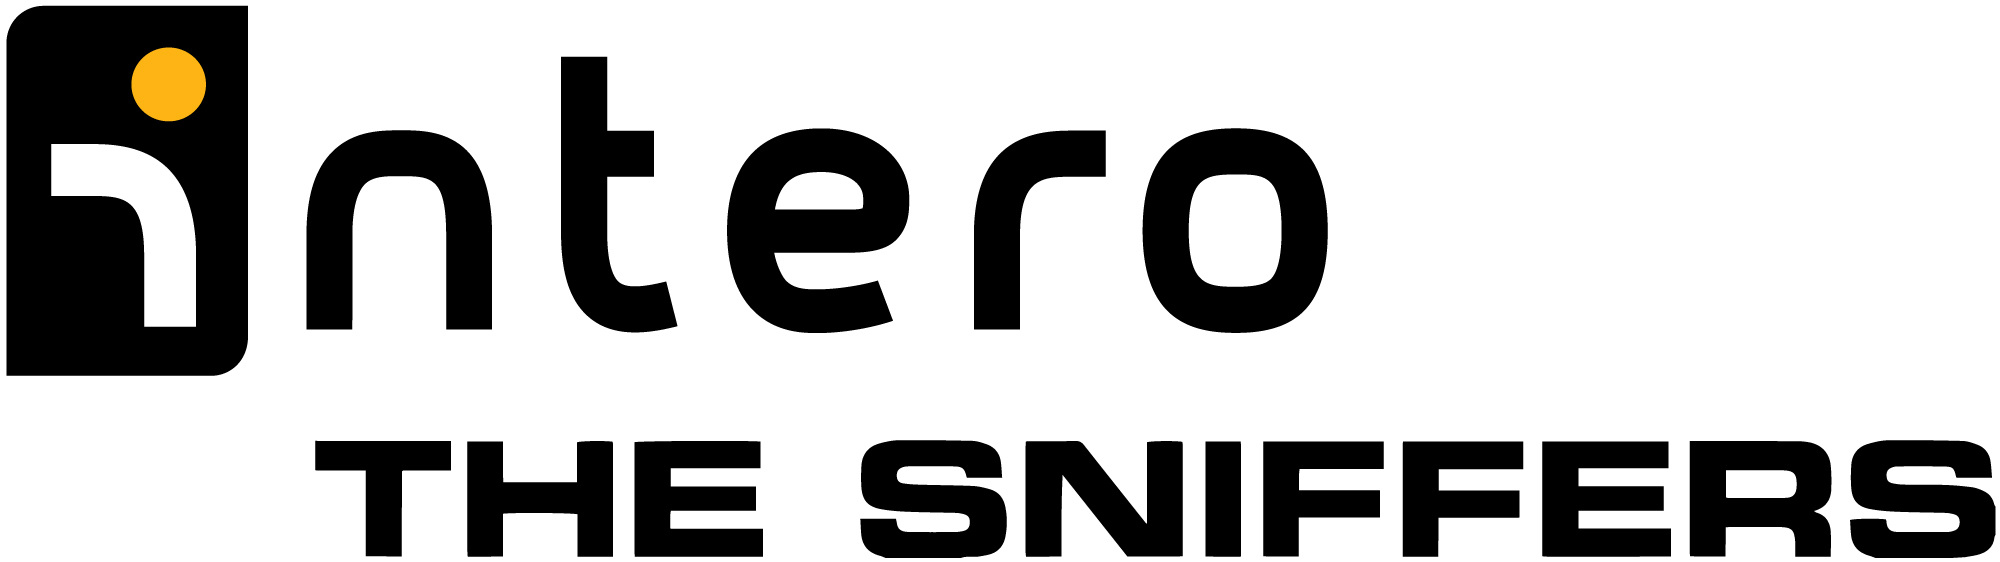 Intero The Sniffers logo